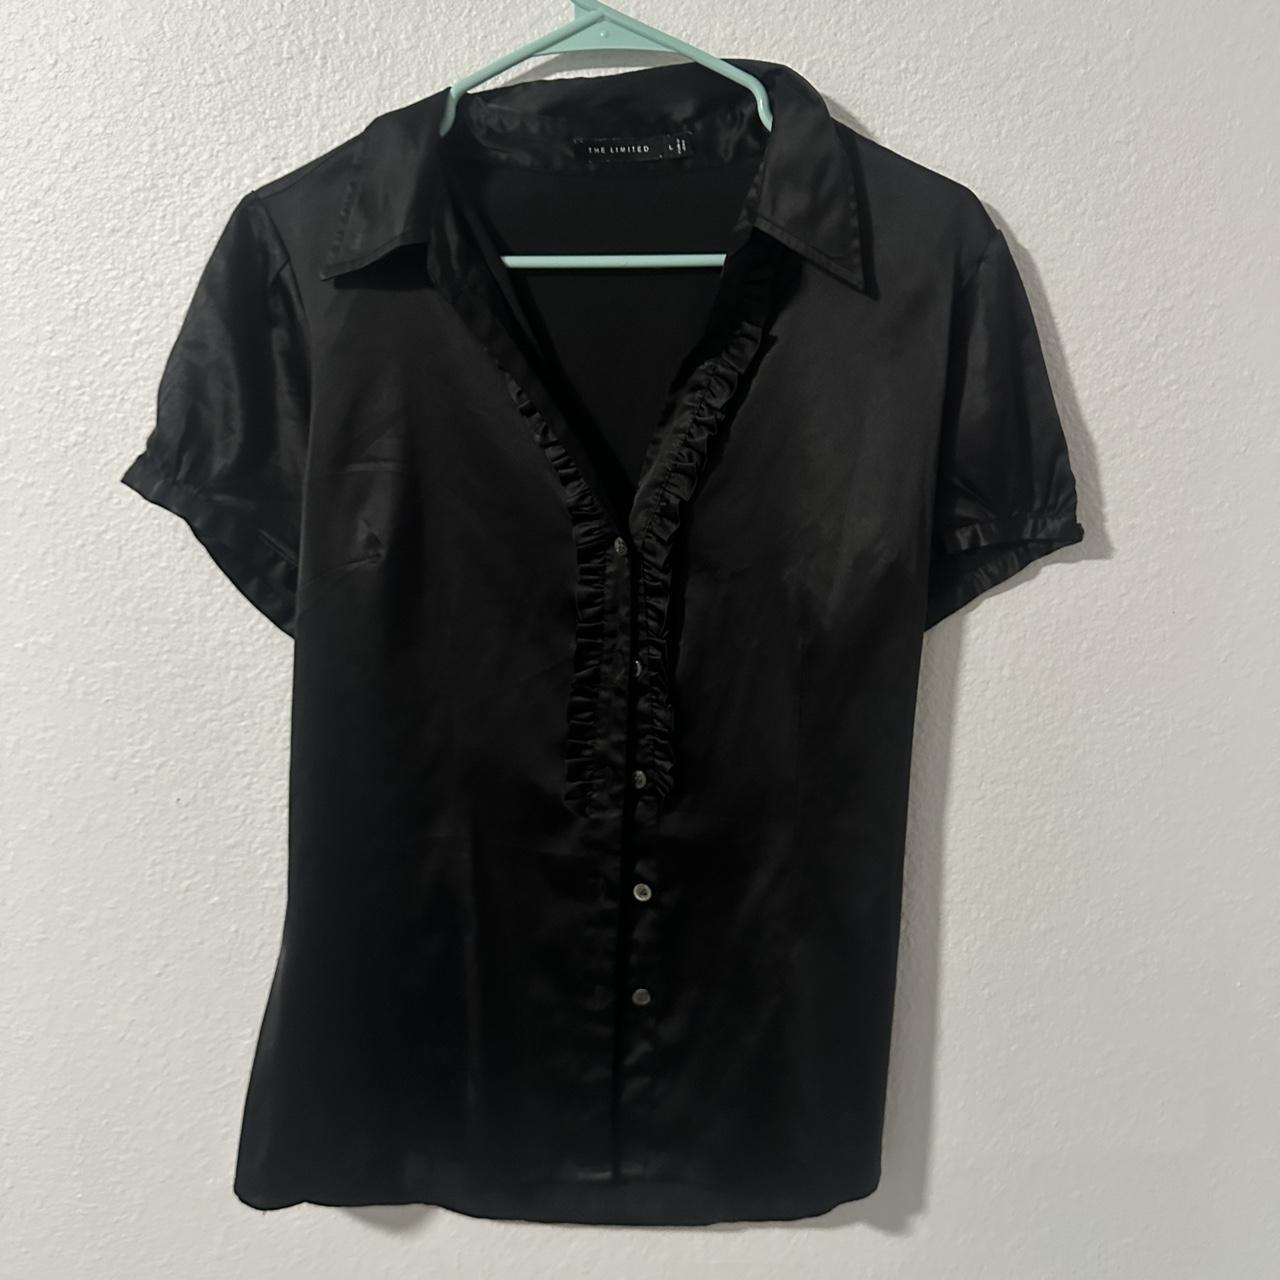 Black, silk like blouse Frill detailing Size... - Depop